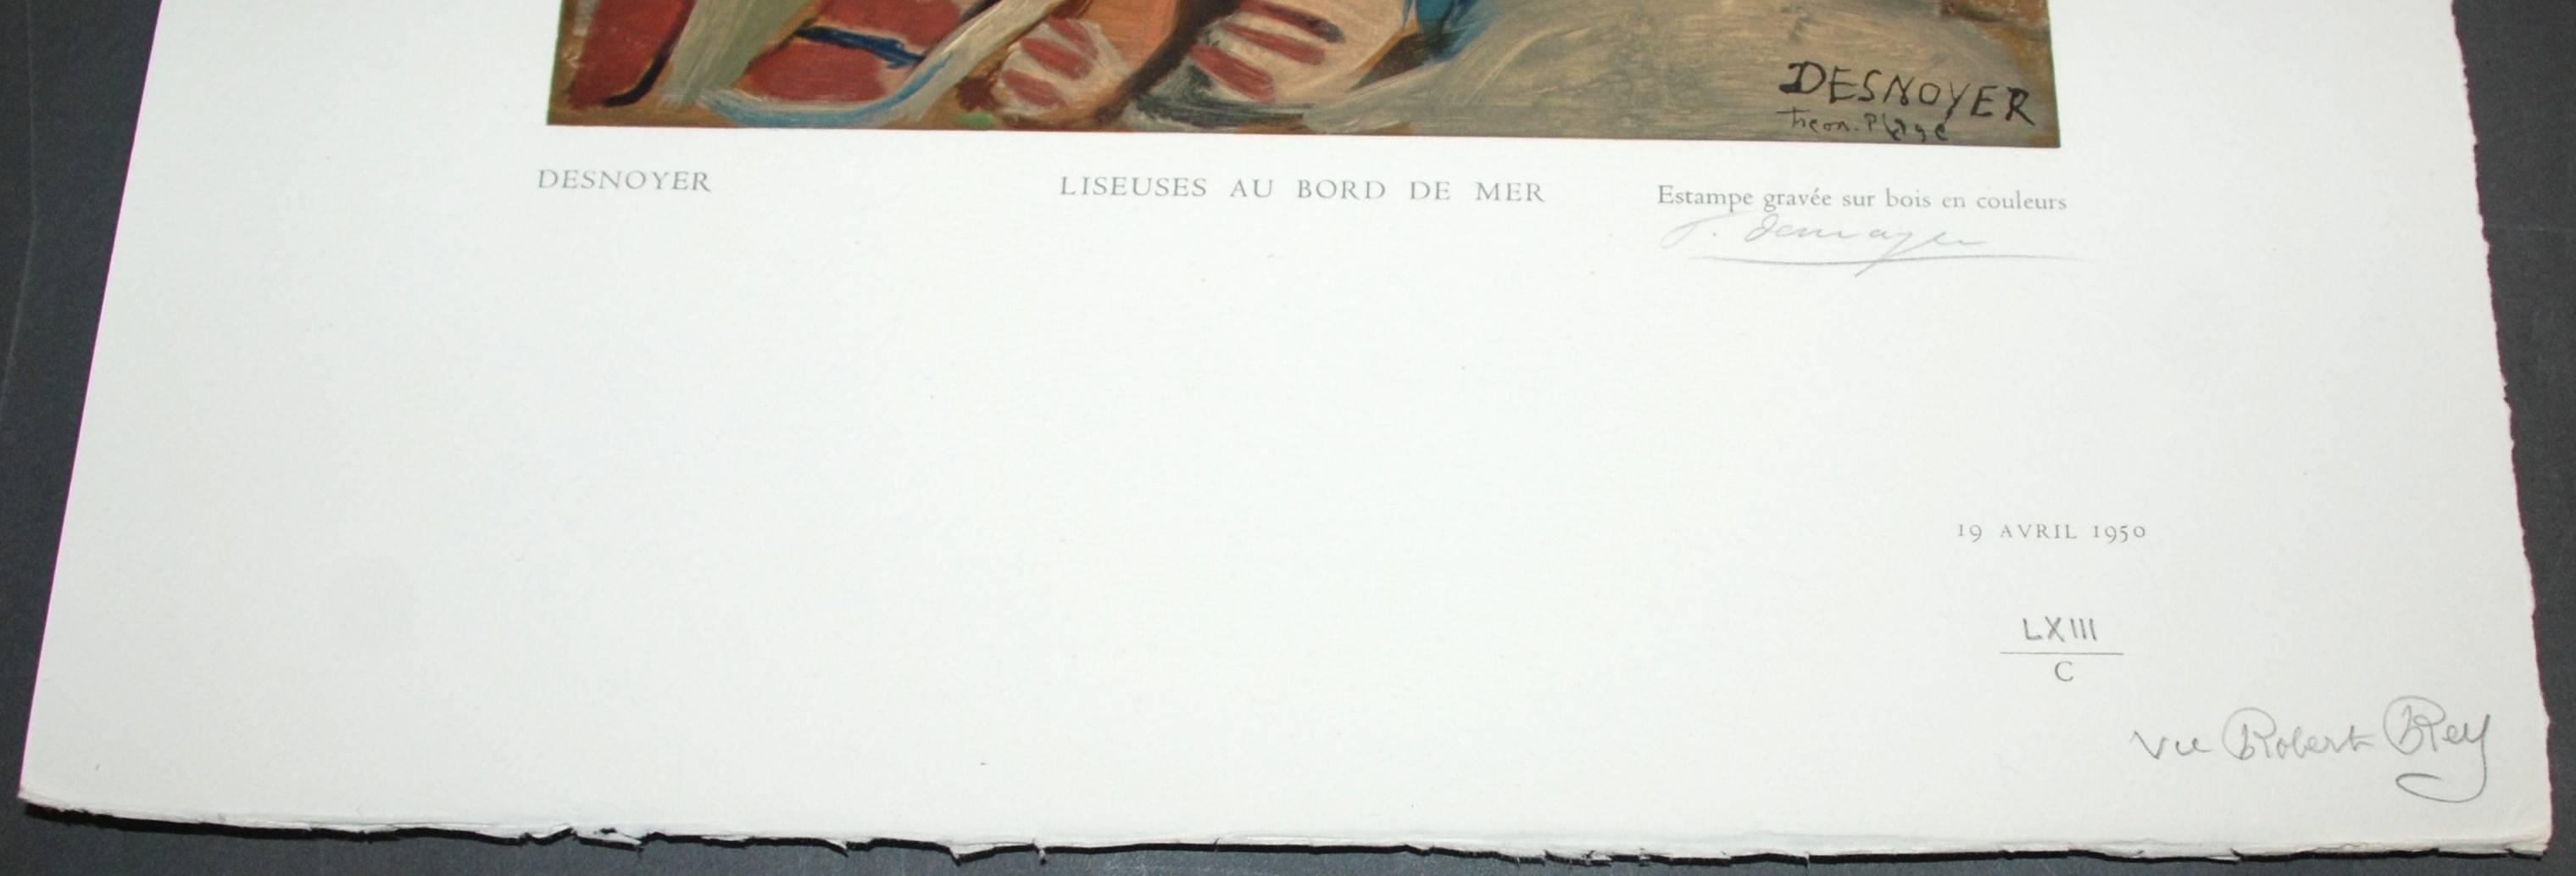 Artist: Francois Desnoyer (after)
Medium: wood engraving in colors on Van Gelder Zonan paper with deckle edge
Title: Liseuses Au Bord De Mer
Portfolio: Estampes
Year: 1950
Edition: LXIII/C
Framed Size: 22 3/4 x 26 inches
Sheet Size: 18 1/8 x 14 1/8